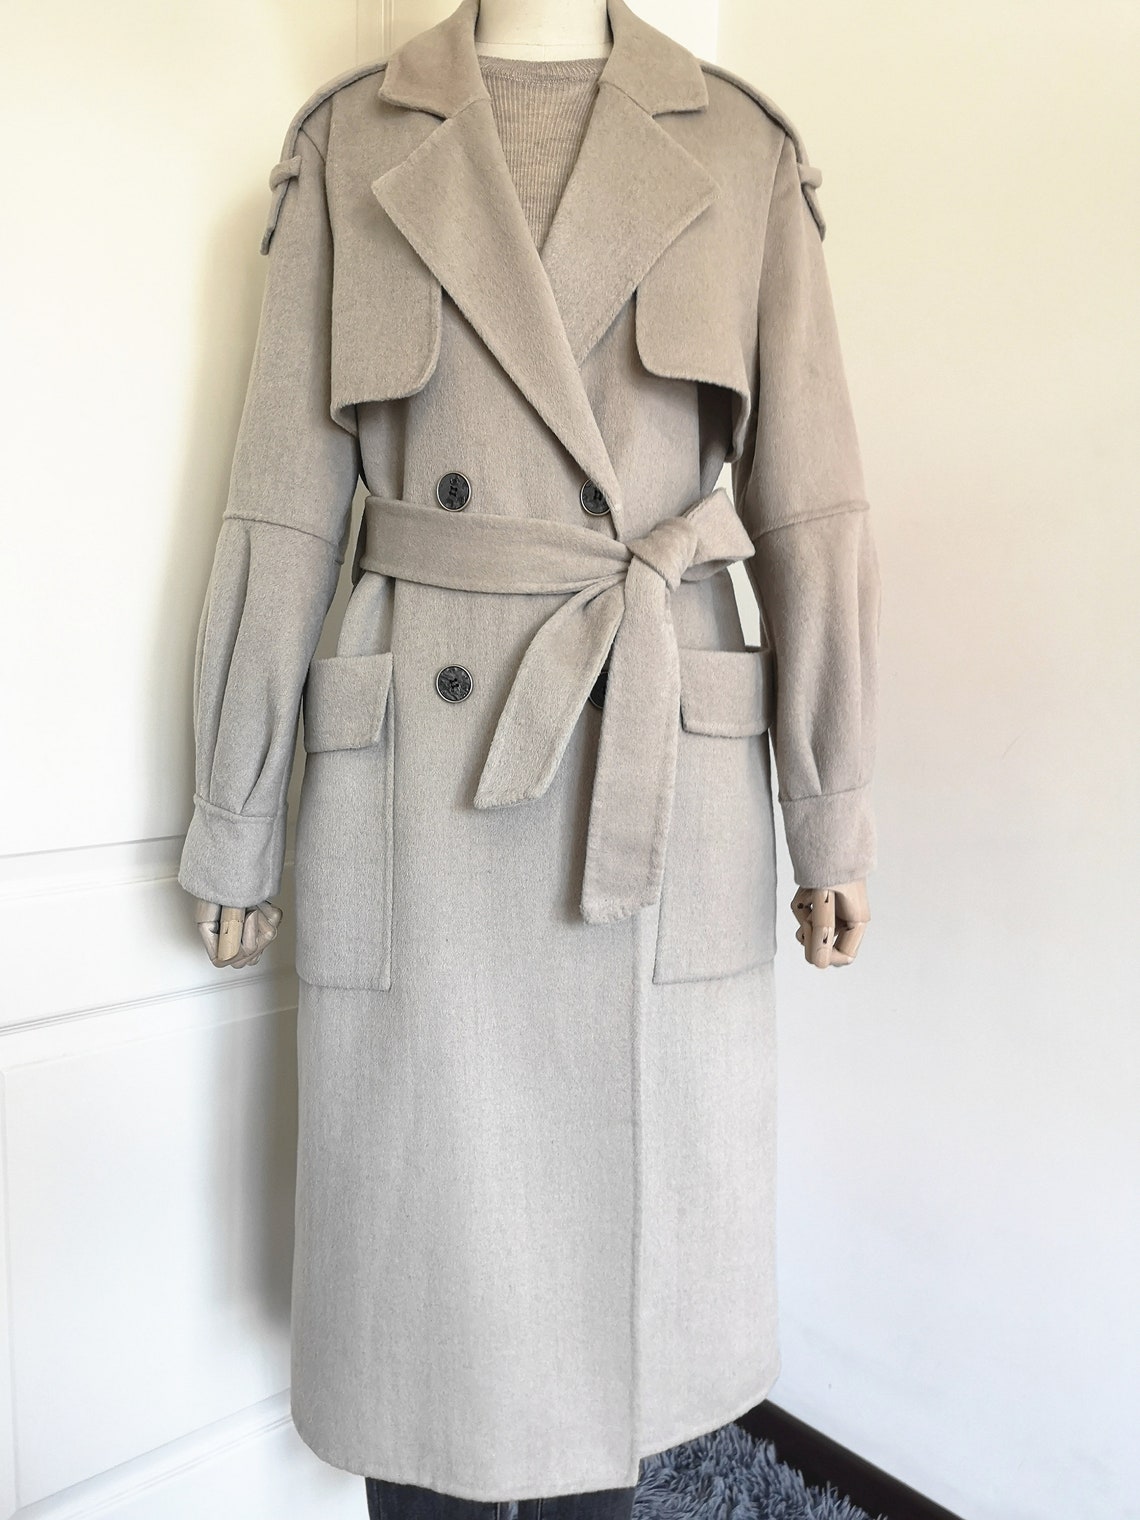 Wool cashmere coat in oat cream Maxi wool coat Women winter | Etsy